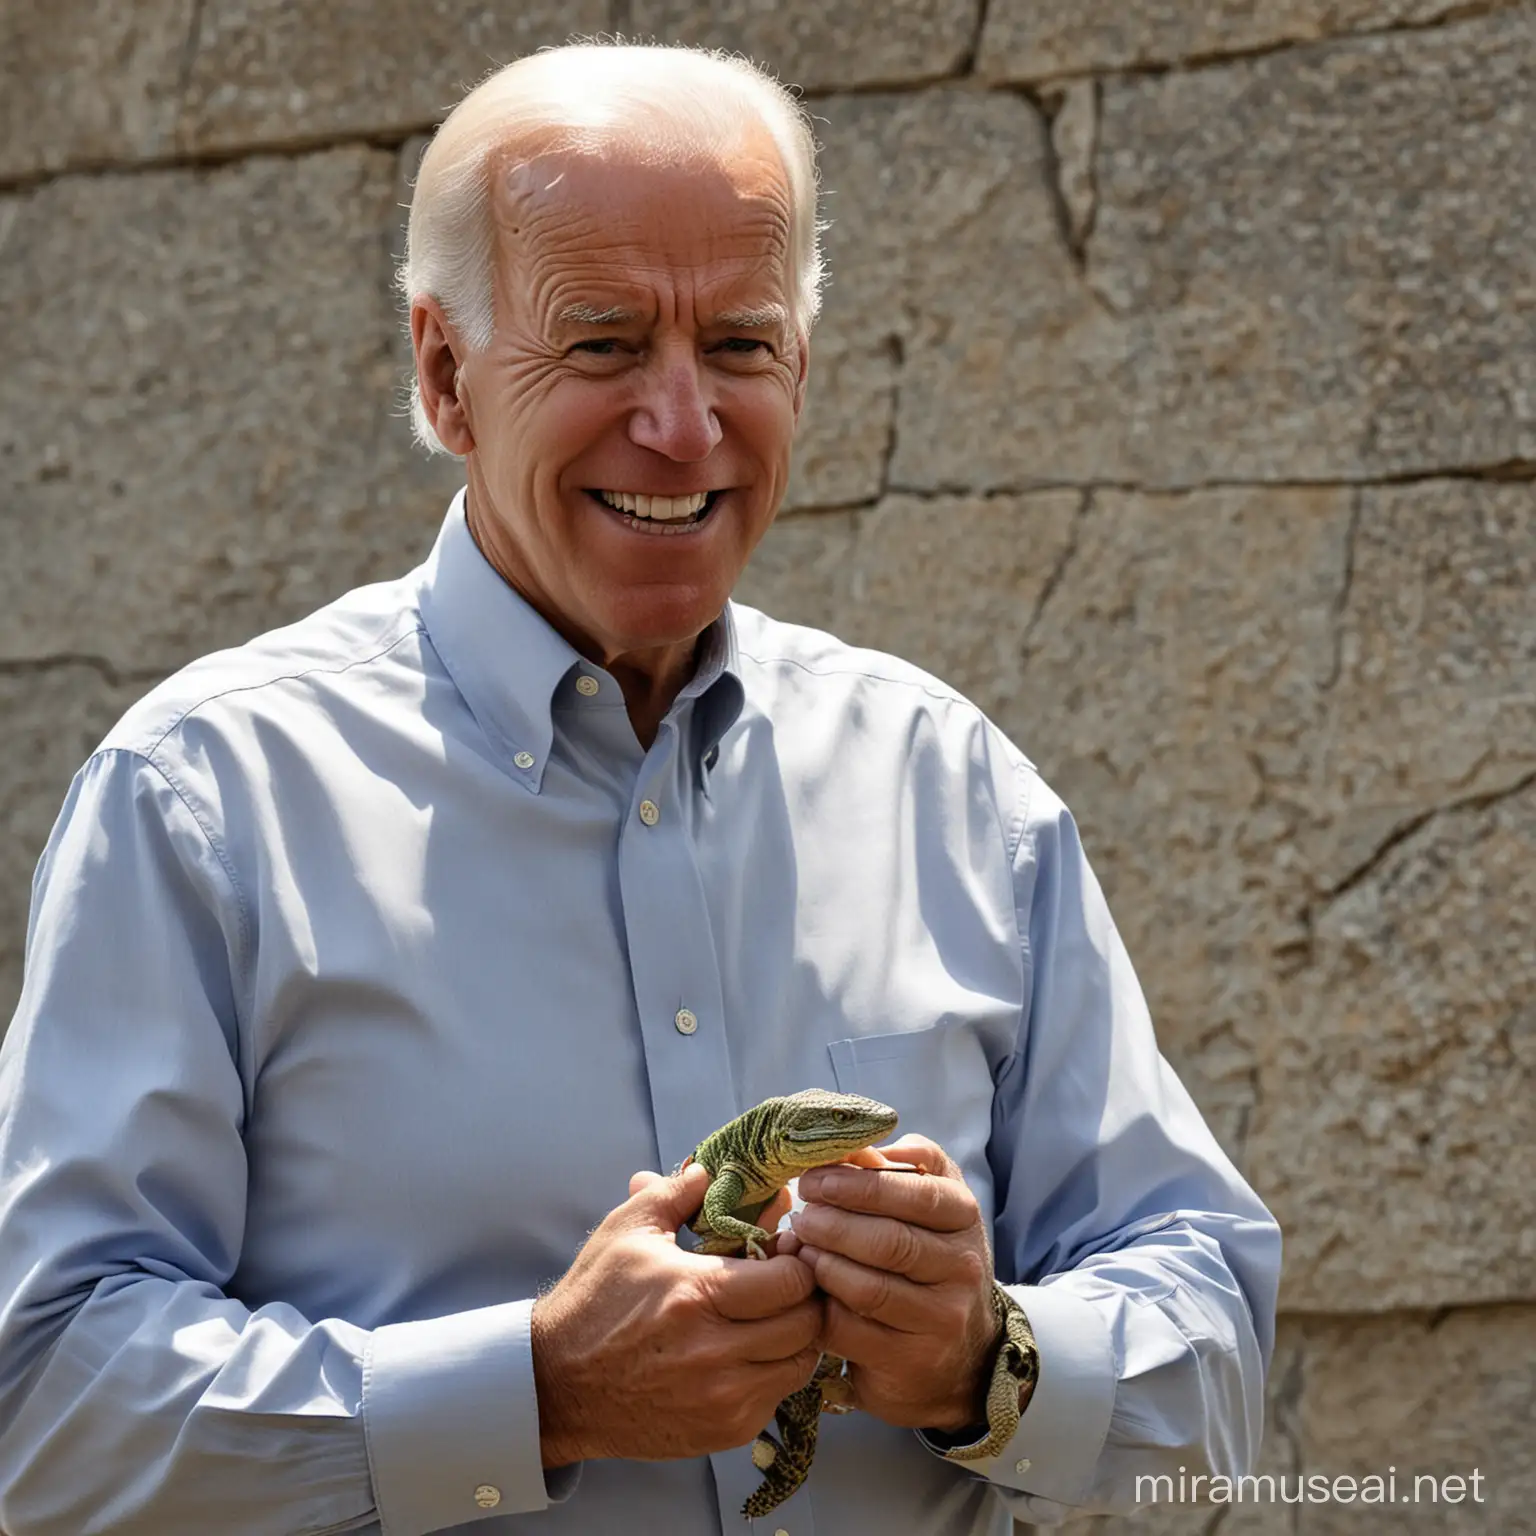 Joe Biden Holding a Lizard Politician Poses with Reptile Companion for Quirky Portrait